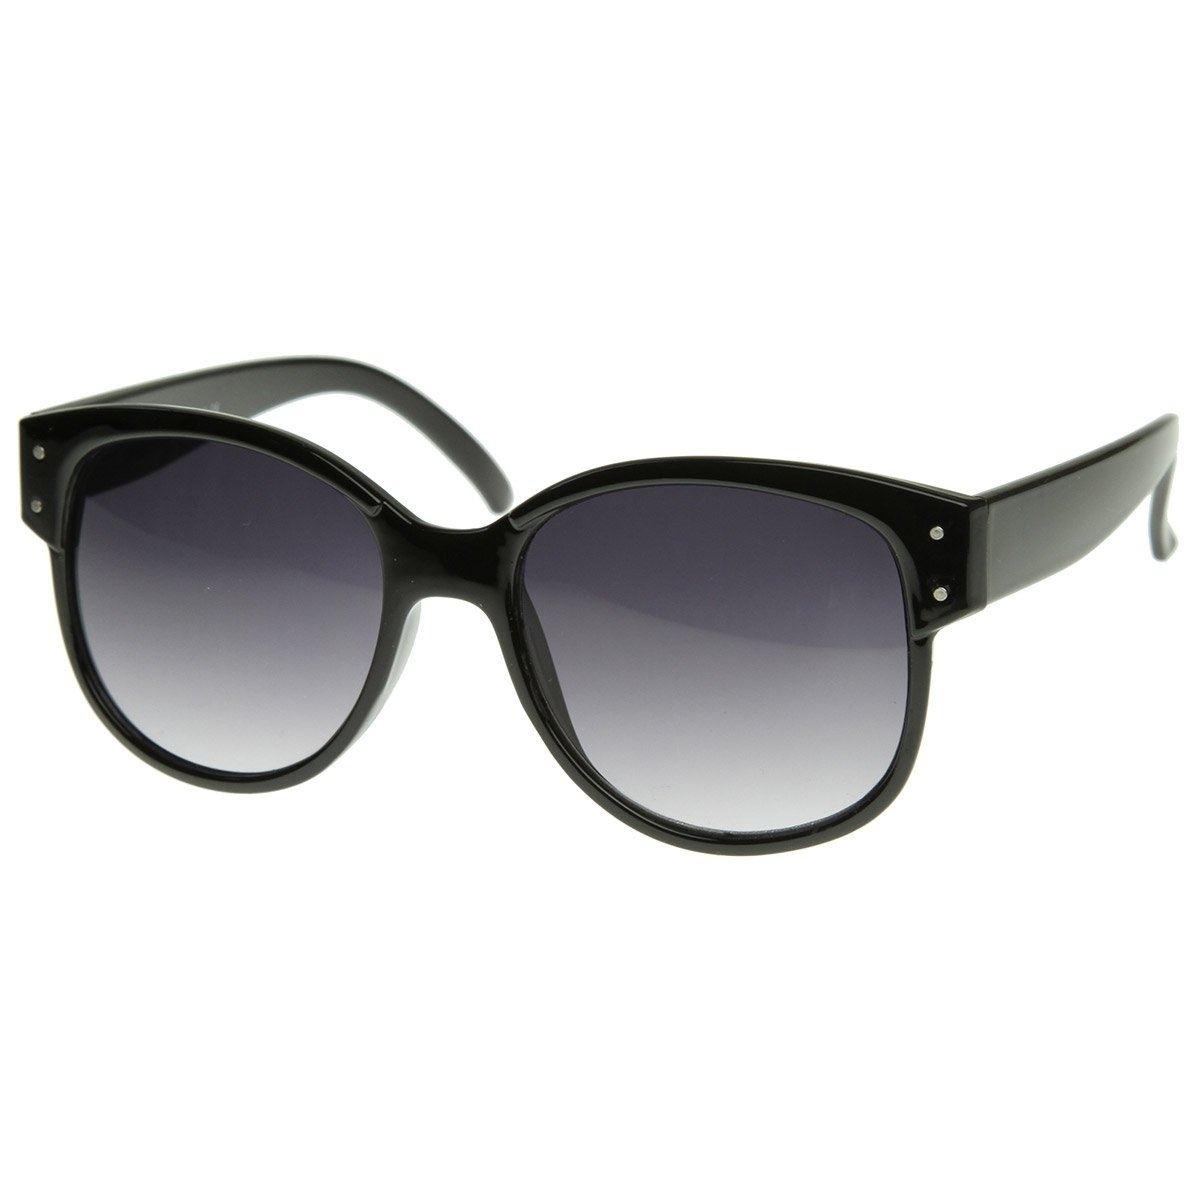 Designer Inspired Large Oversized Retro Style Sunglasses With Metal Rivets - Tortoise